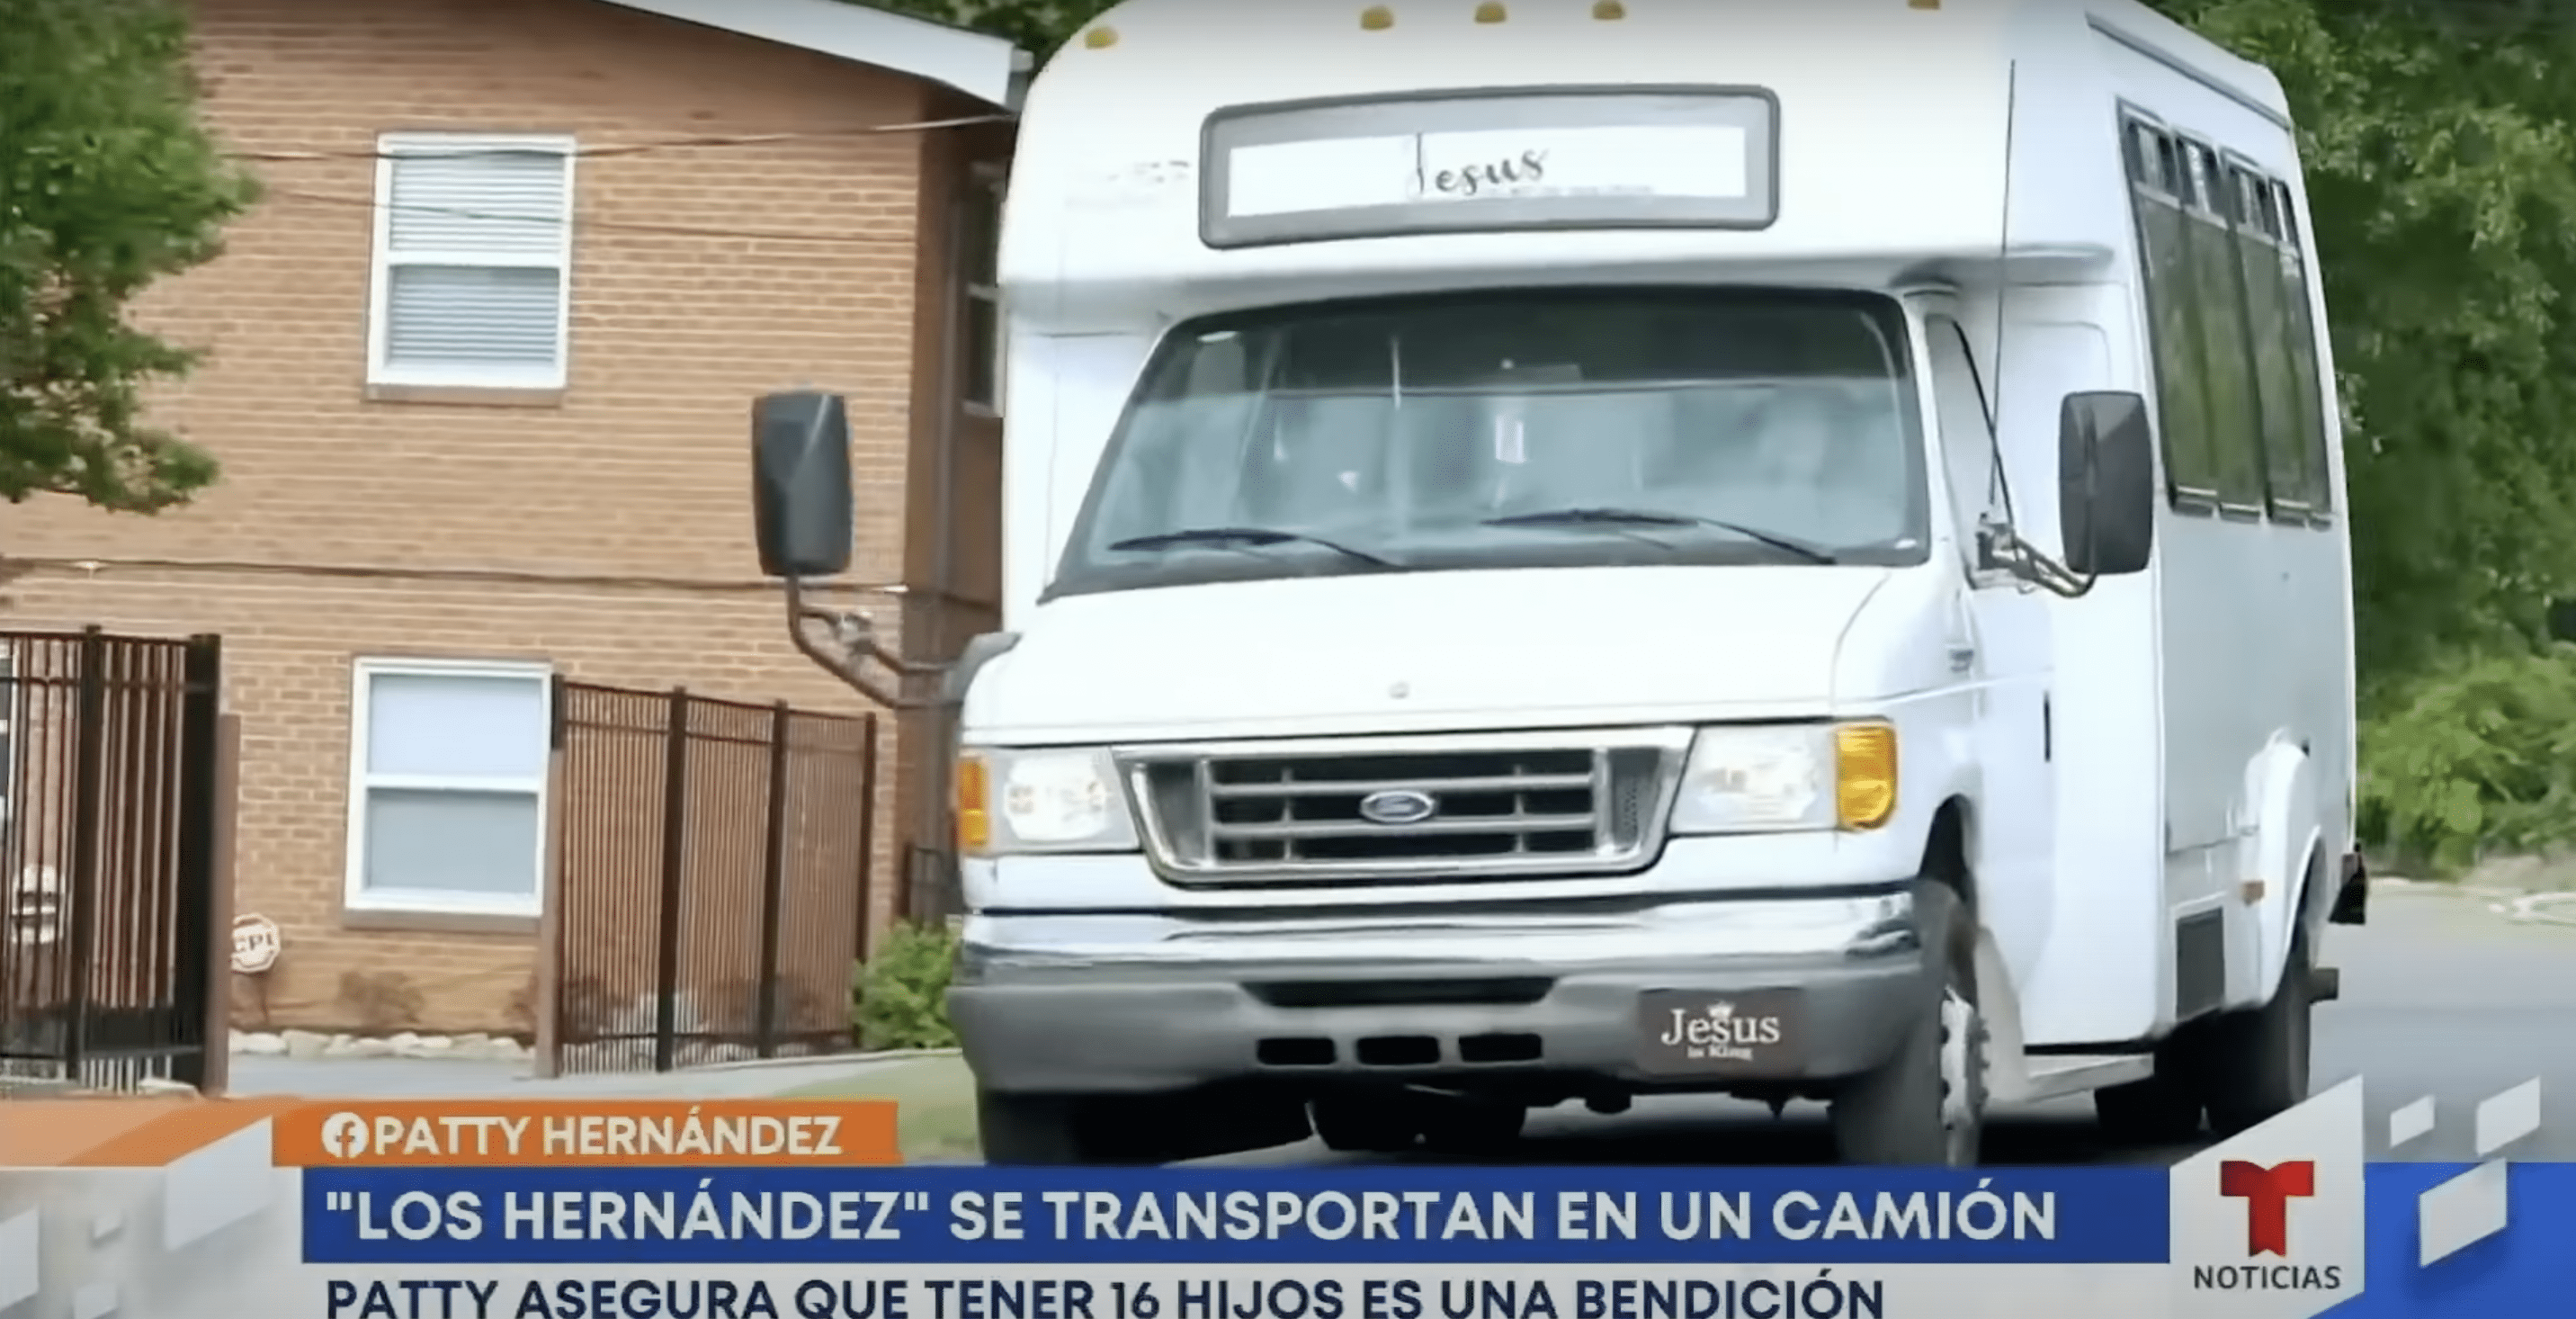 Der 20-Sitzer-Bus der Familie Hernandez. | Quelle: YouTube.com/hoy Día